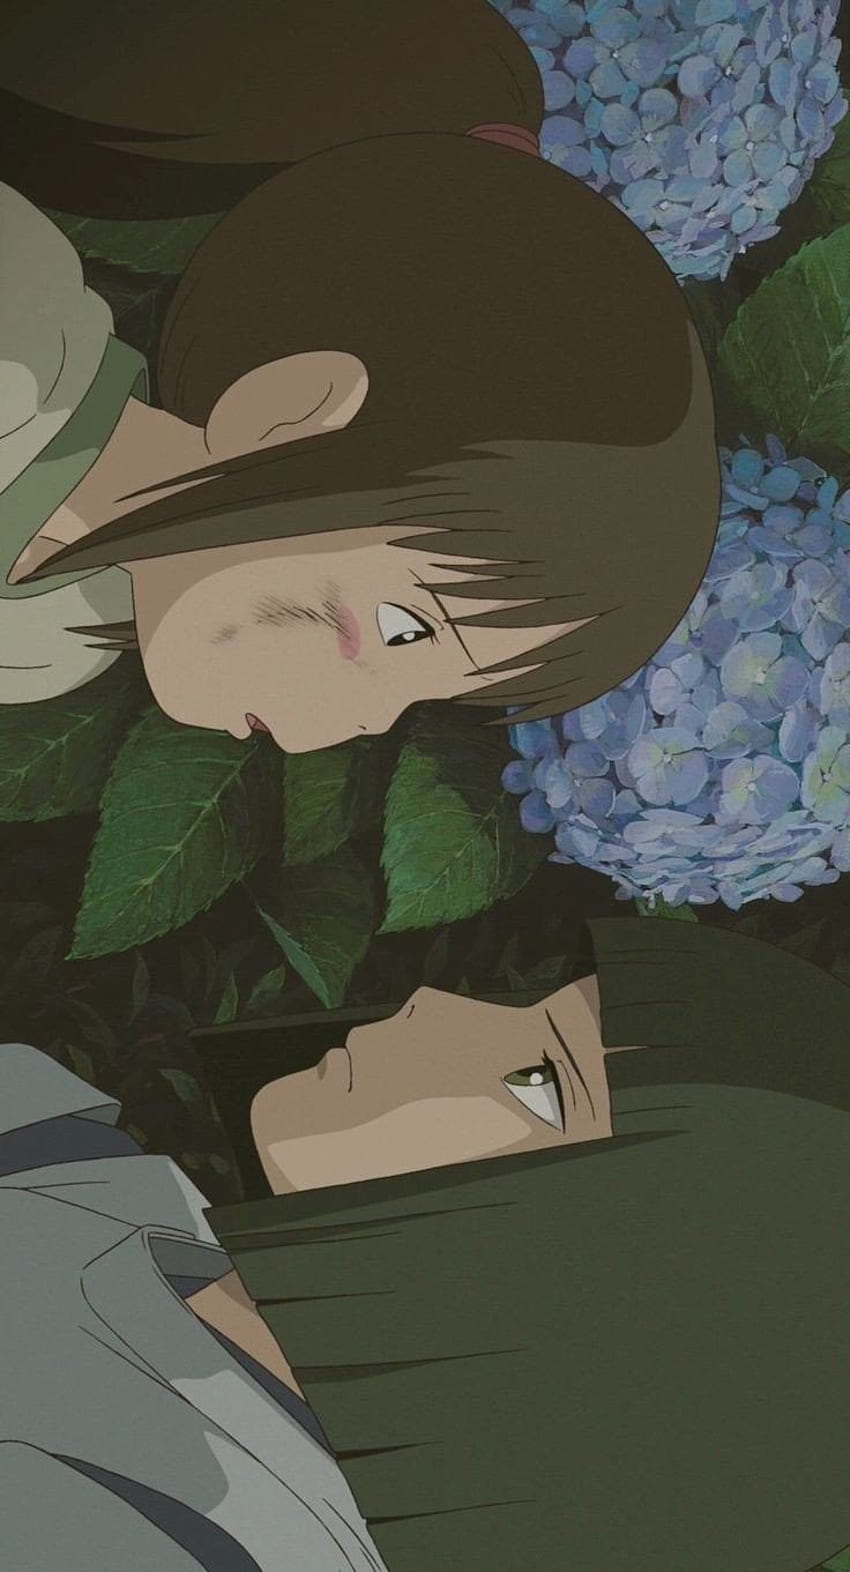 Jennifer Zheng di Studio Ghibli (masa kecil) 2019, Spirited Away - Studio Ghibli Fest 2019 wallpaper ponsel HD